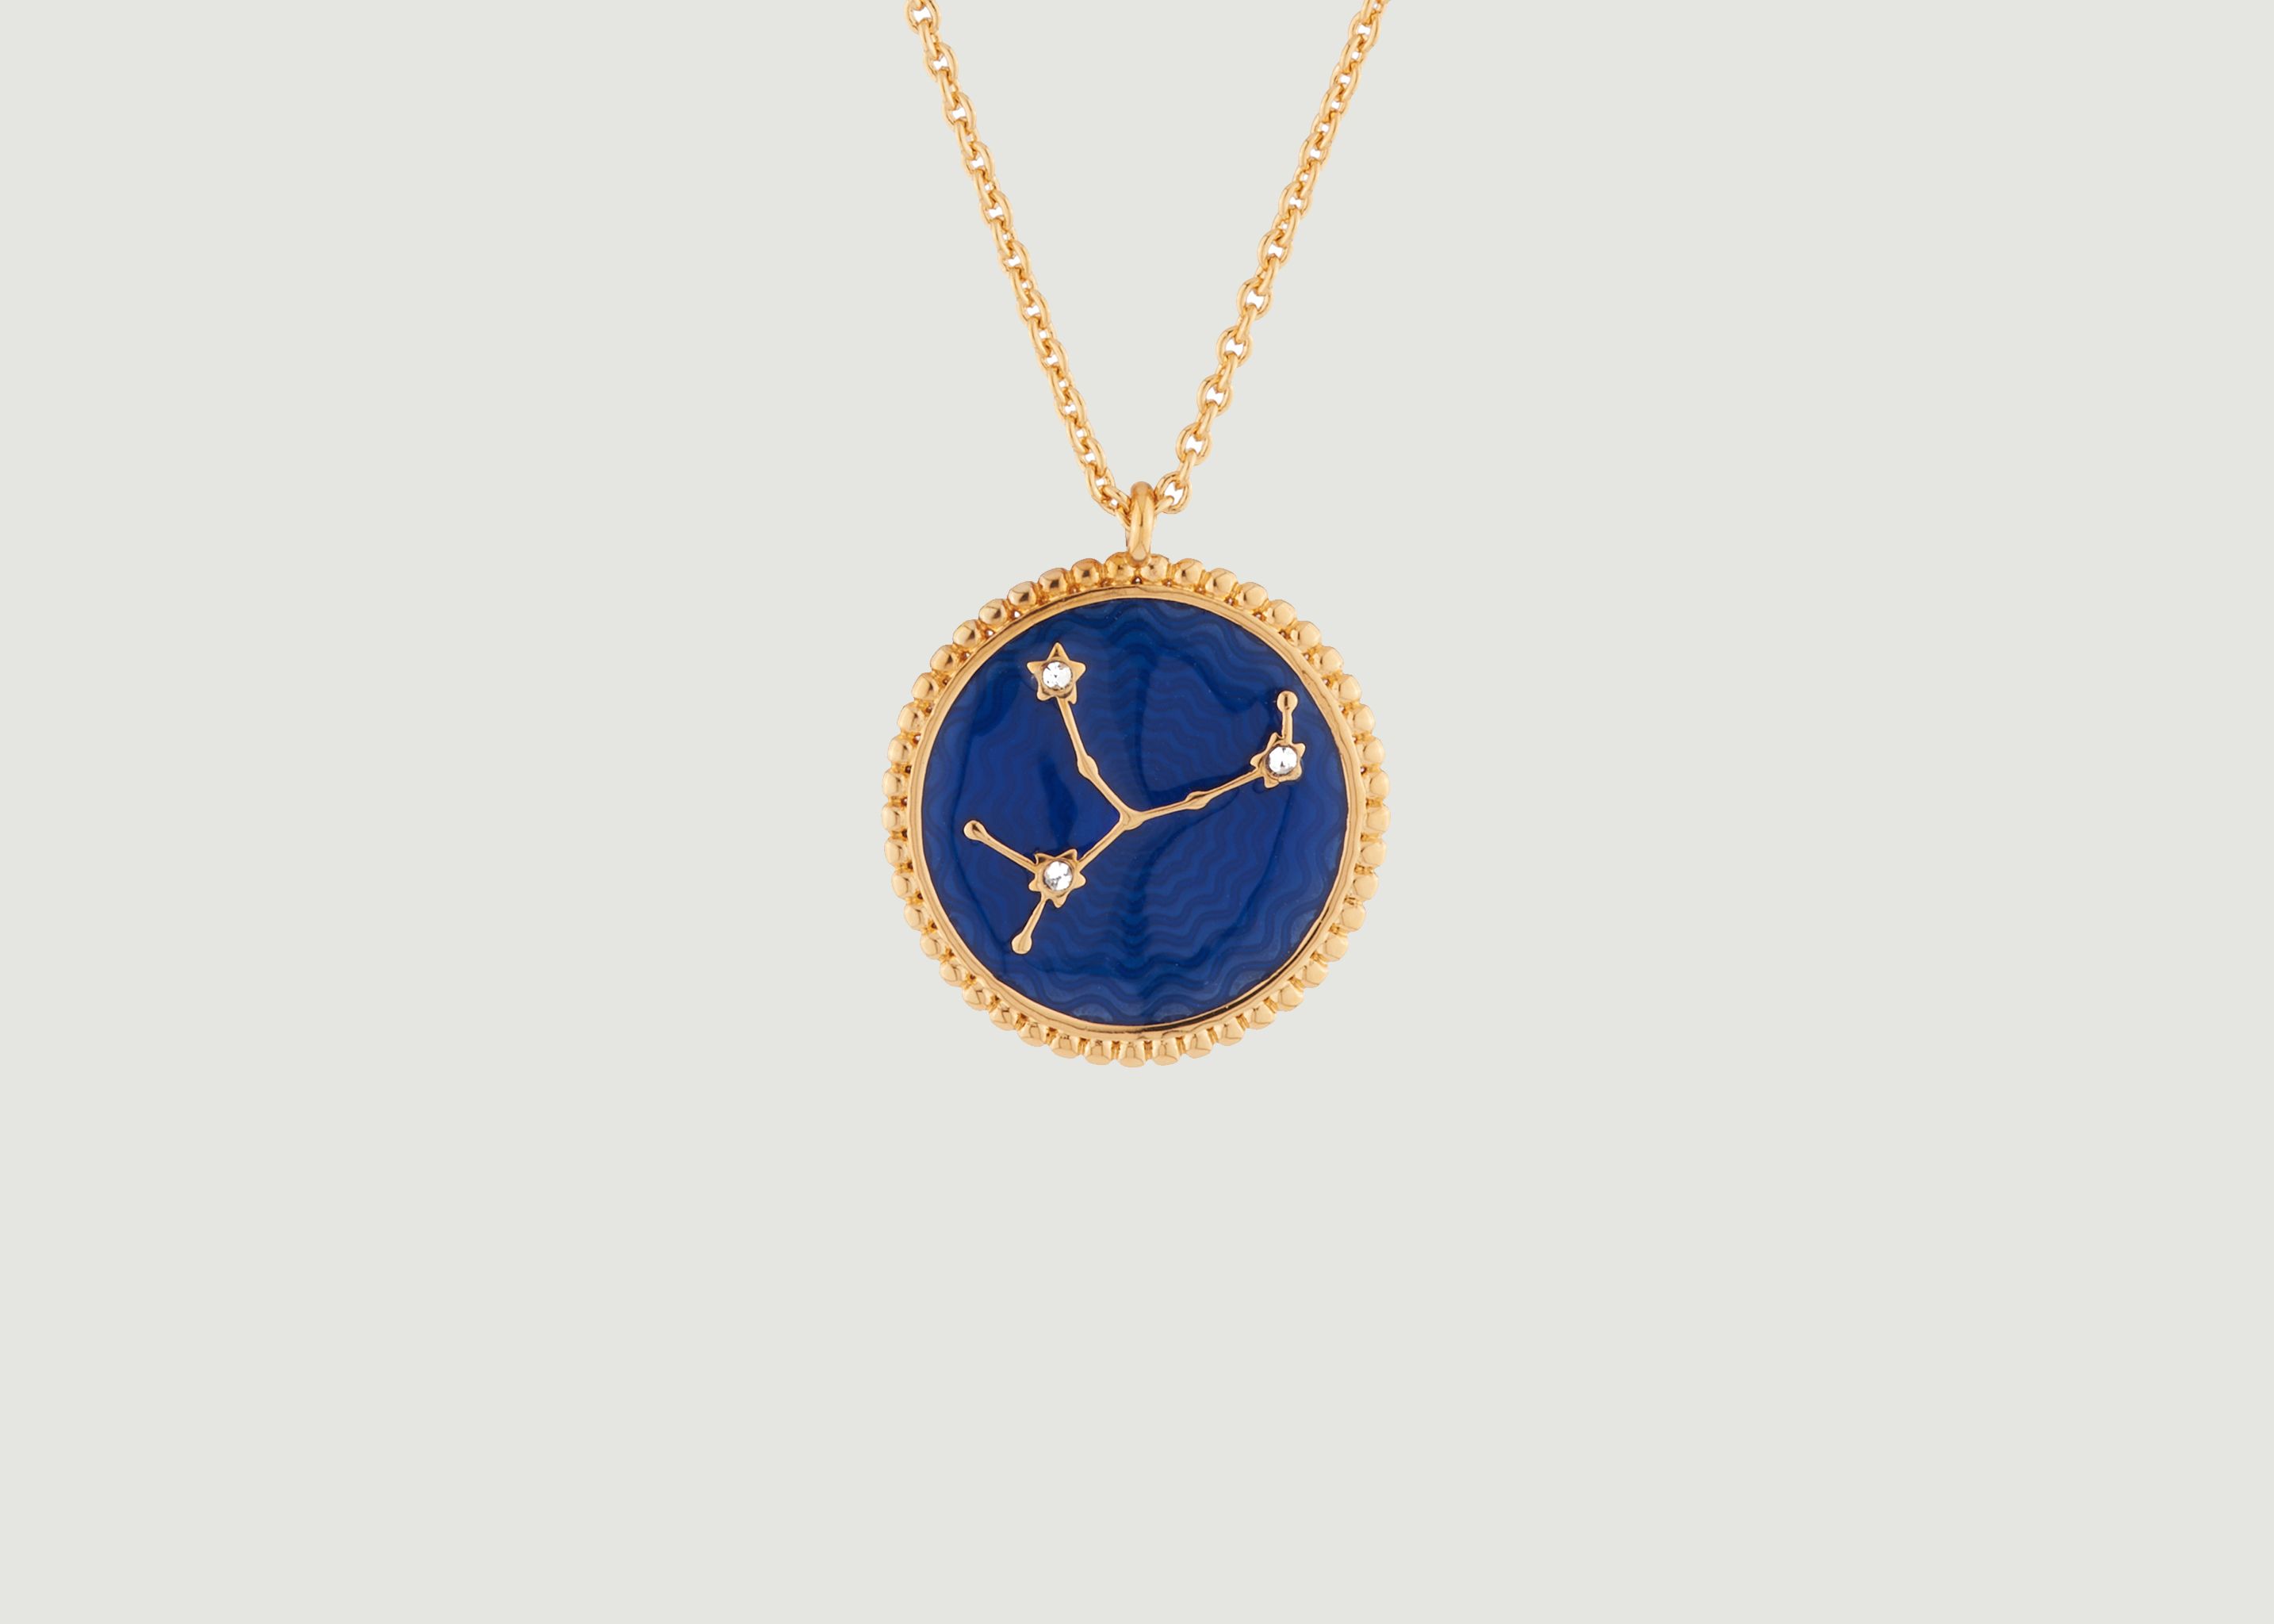 Virgo astrological sign necklace with pendant - Les Néréides